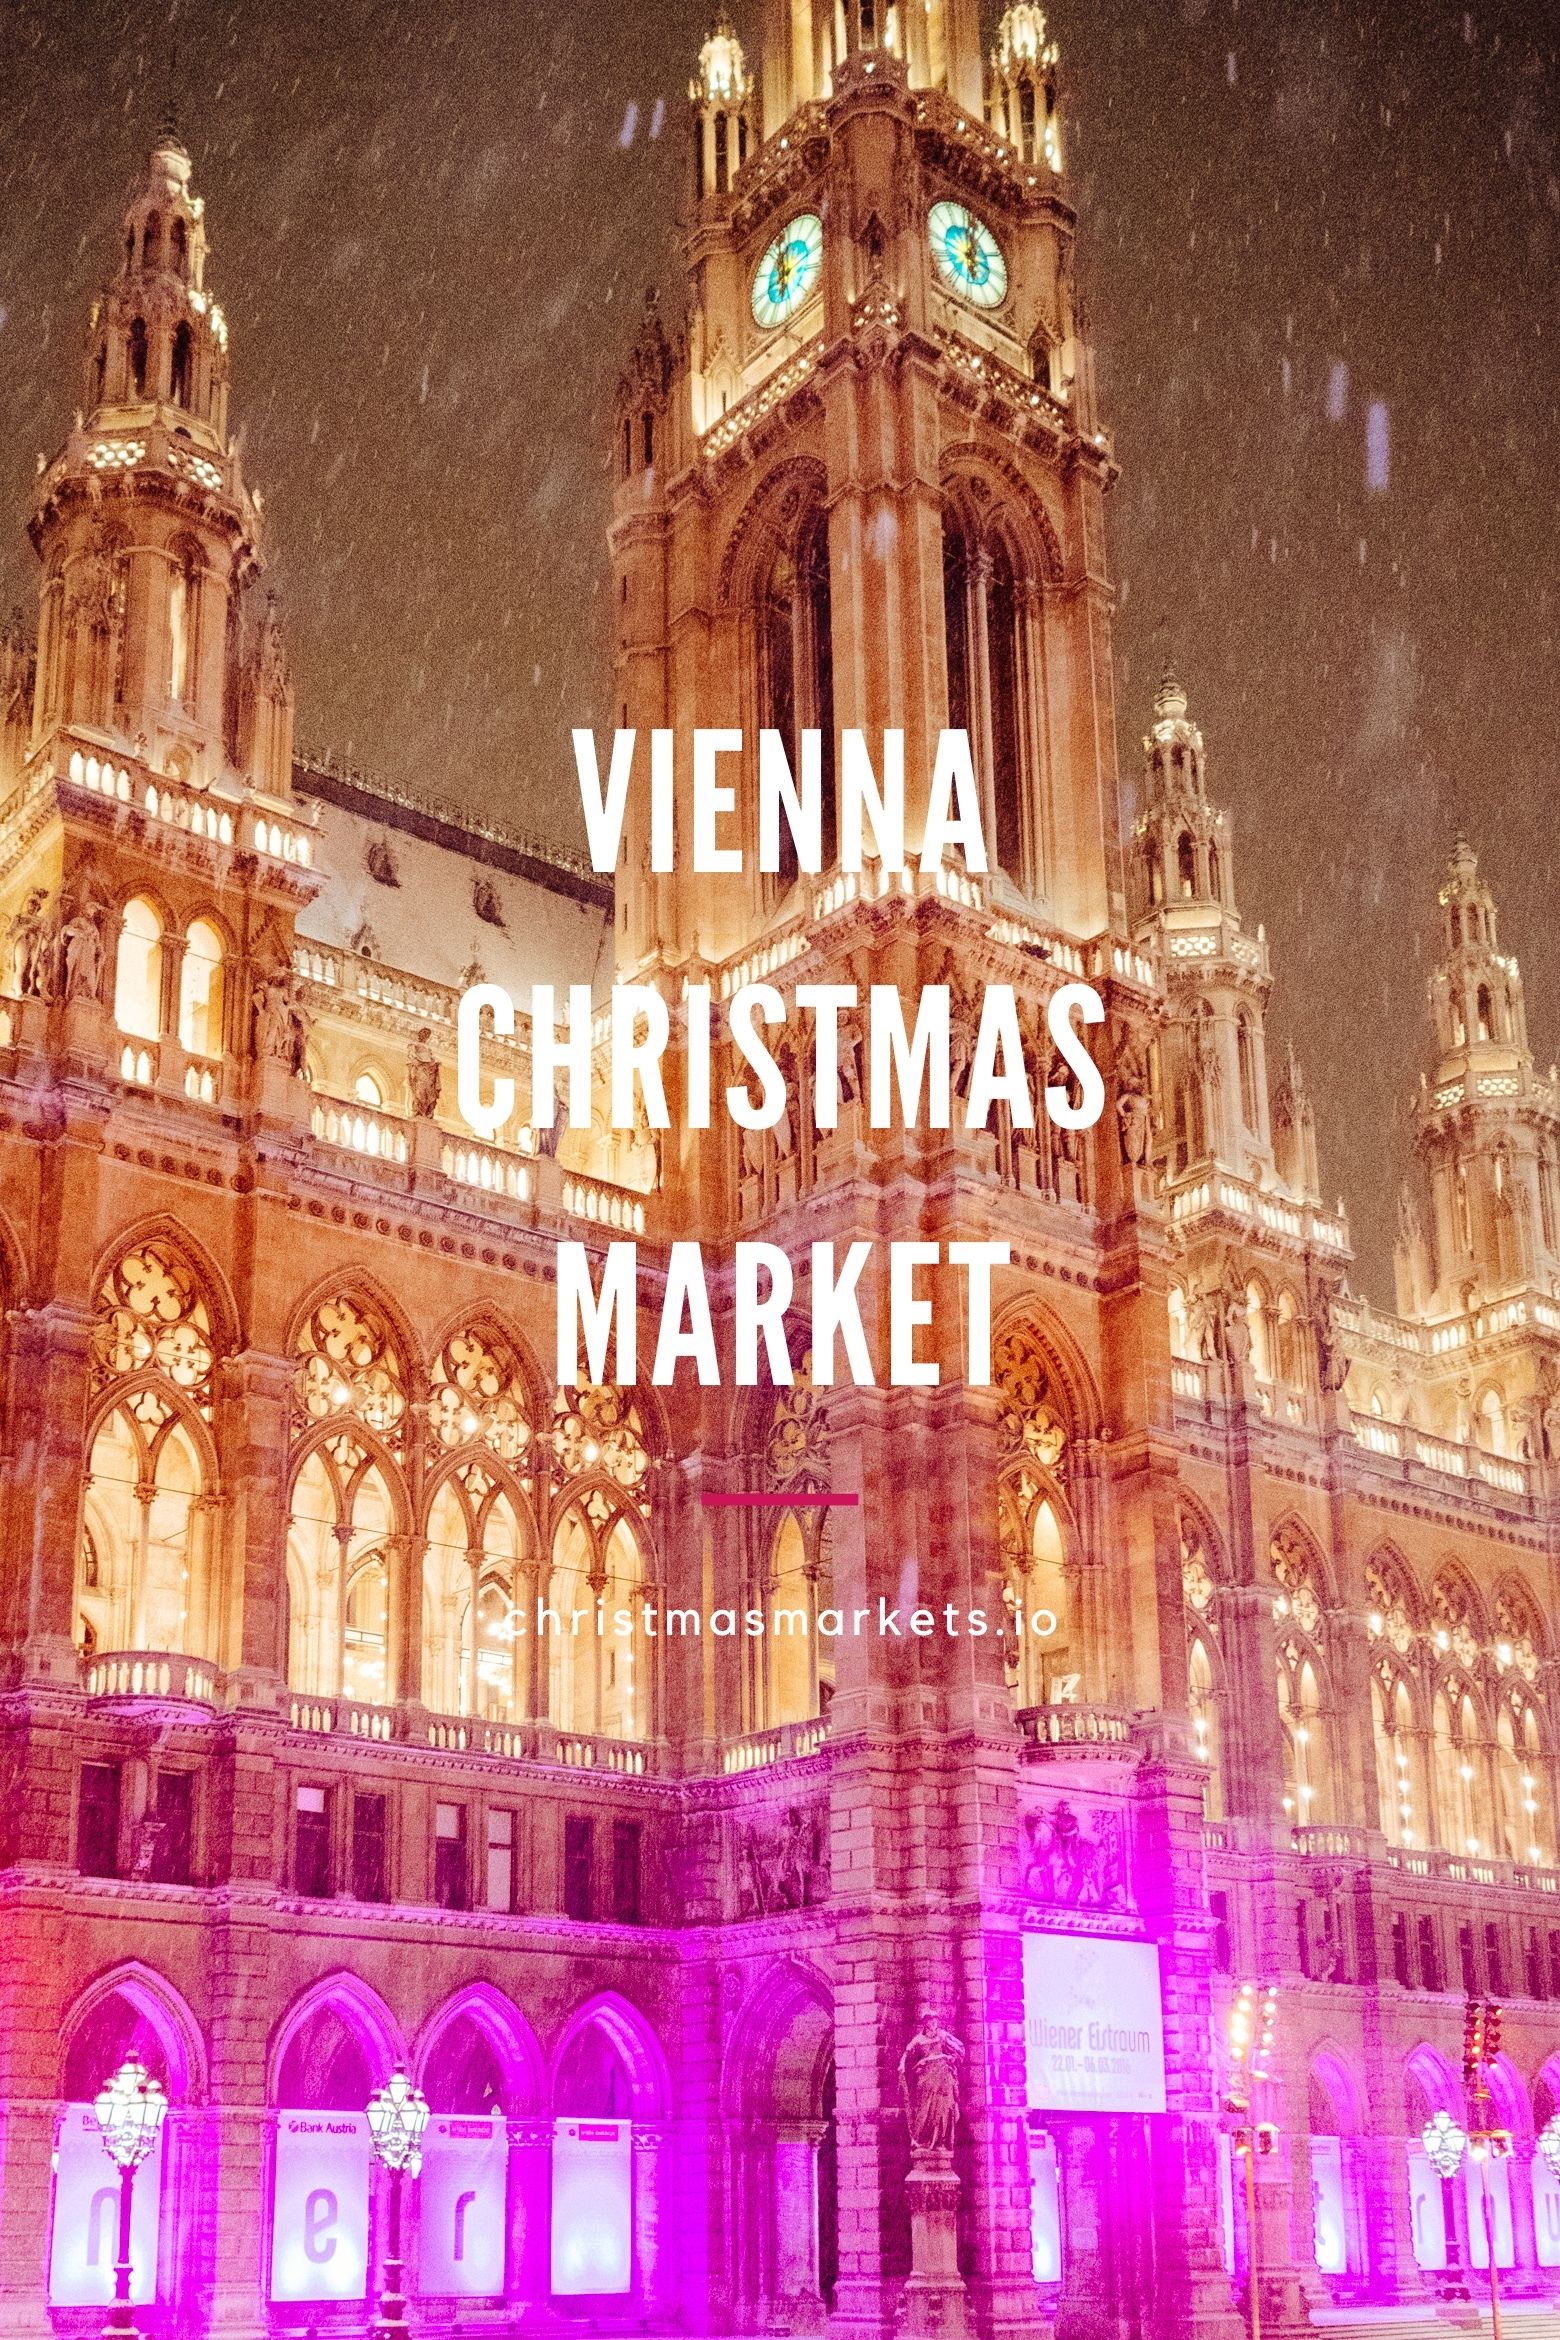 Vienna Town Hall with Christmas lights and snow.